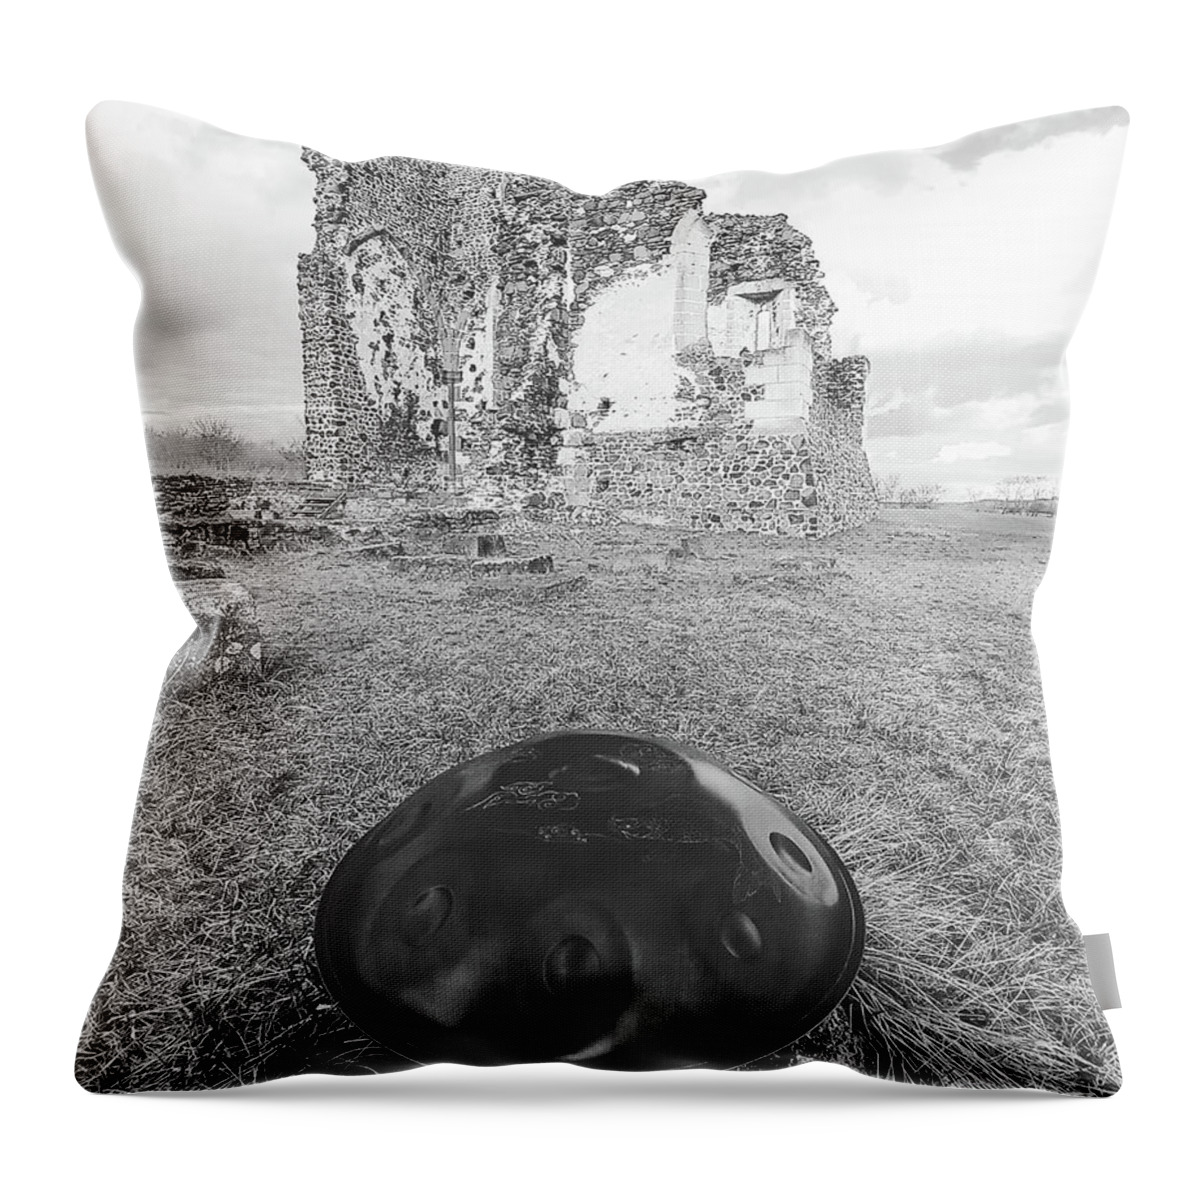 Ruin Throw Pillow featuring the photograph Handpan at ruins by Alexa Szlavics